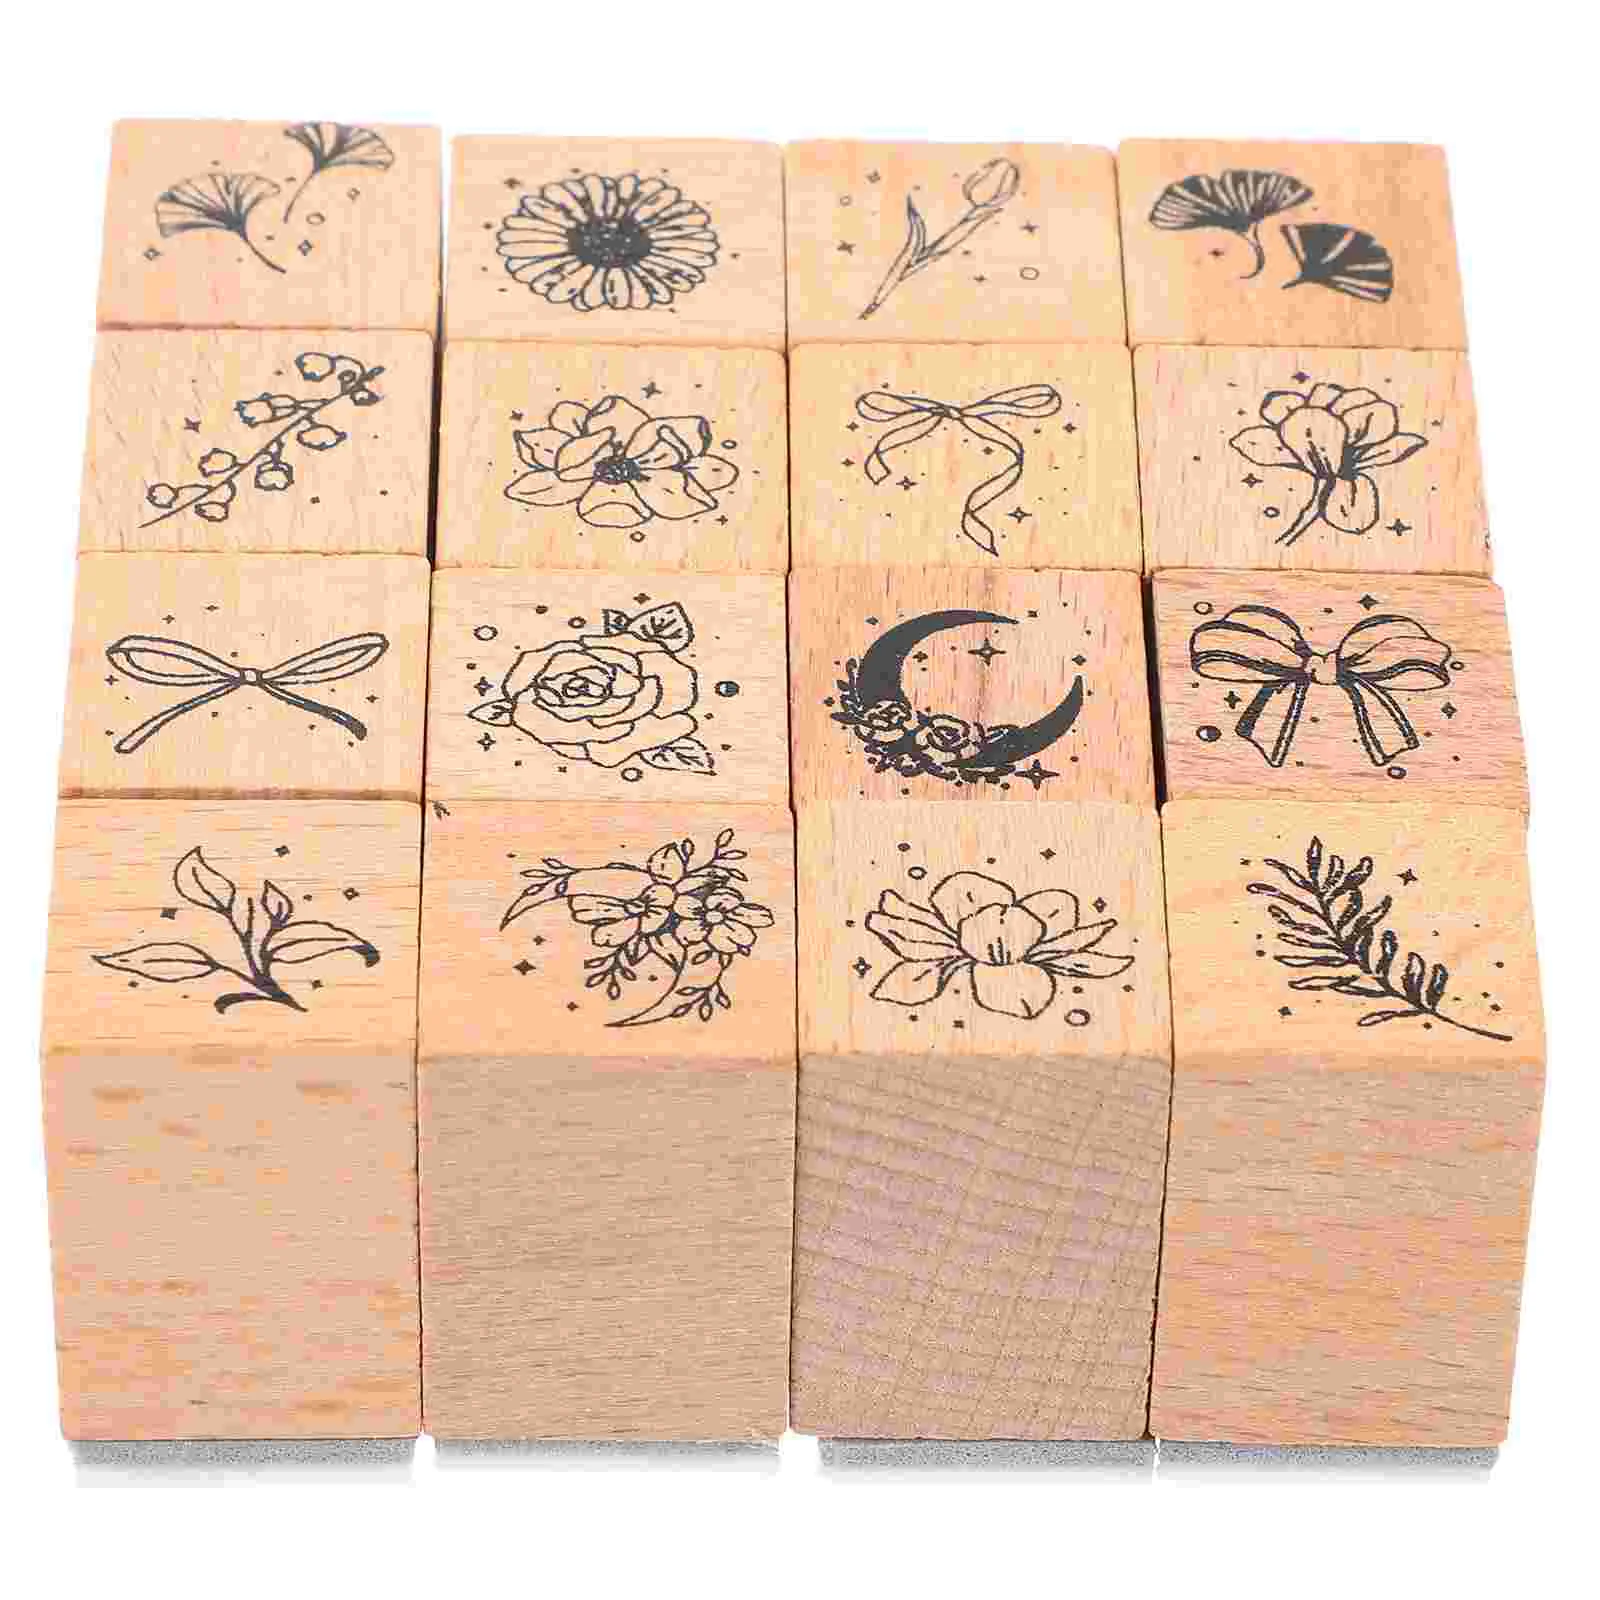 

16 Pcs Ink Stamp Other Supplies Stamps Wooden Scrapbook Journal DIY Crafts Child